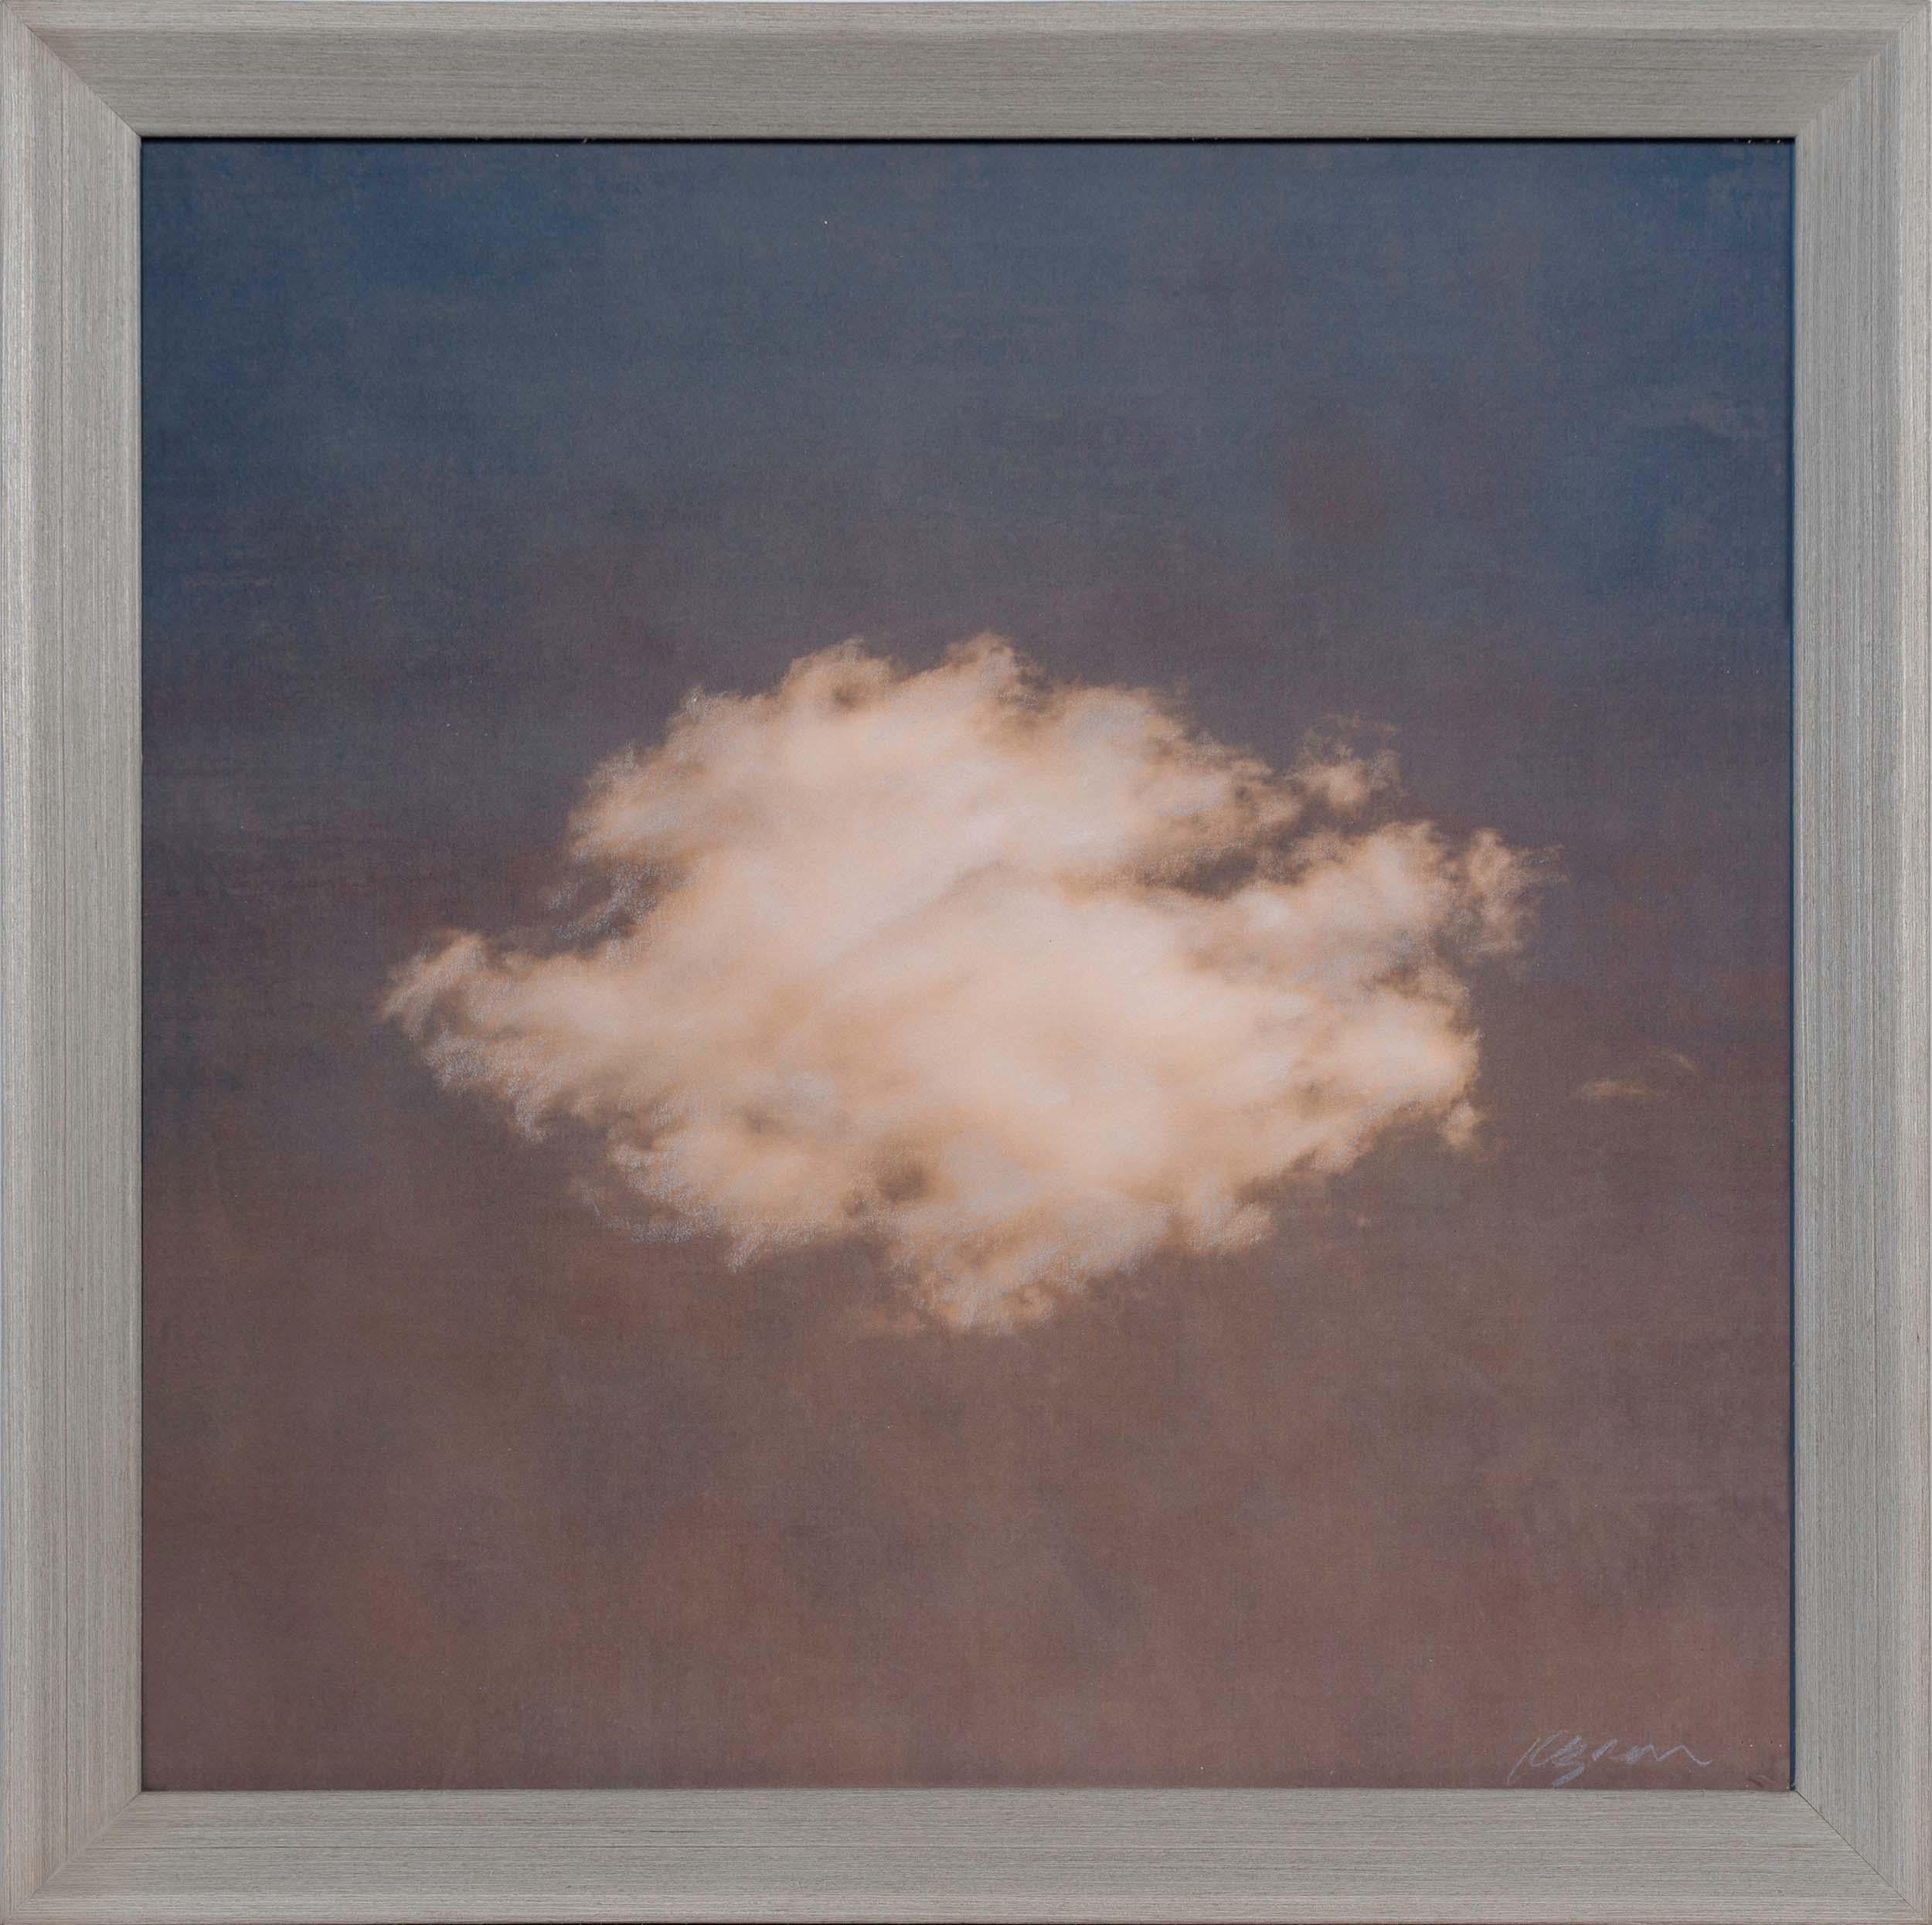 Kate Breakey Landscape Photograph - Twelve Clouds, Softly, Slowly (L)